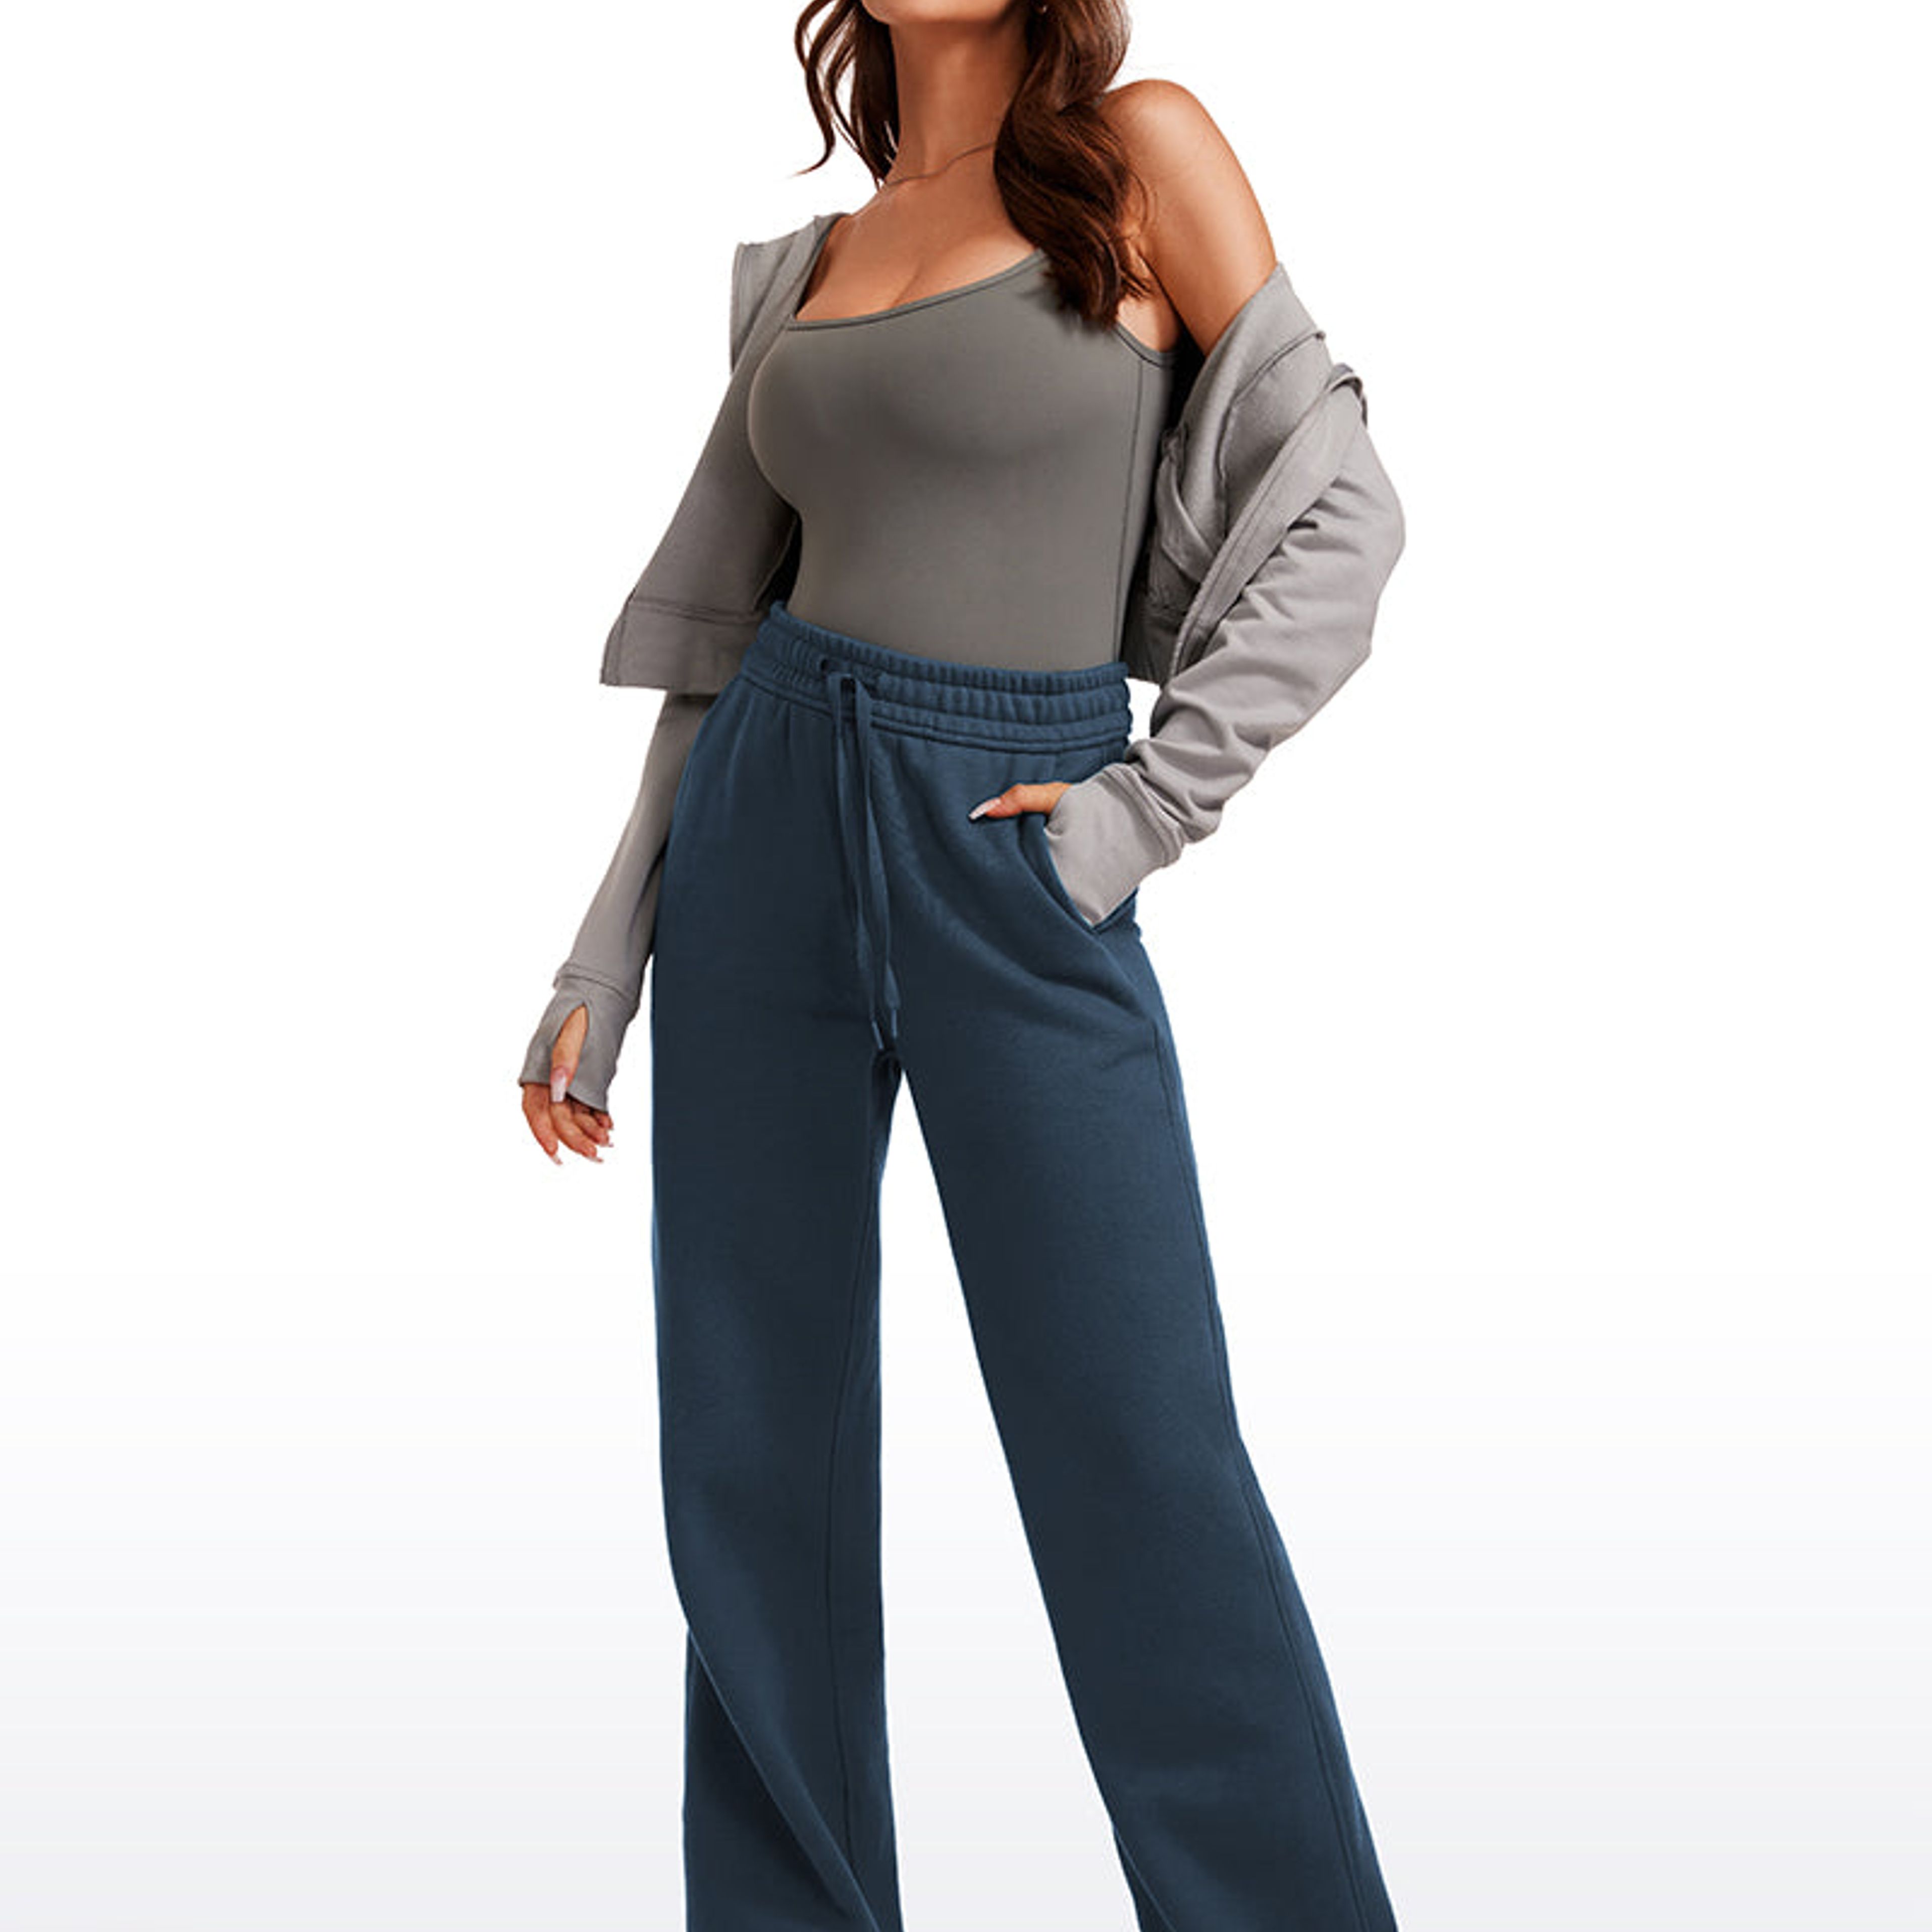  CRZ YOGA Cotton Fleece Lined Sweatpants Women High Waisted  Warm Casual Lounge Jogger Pants